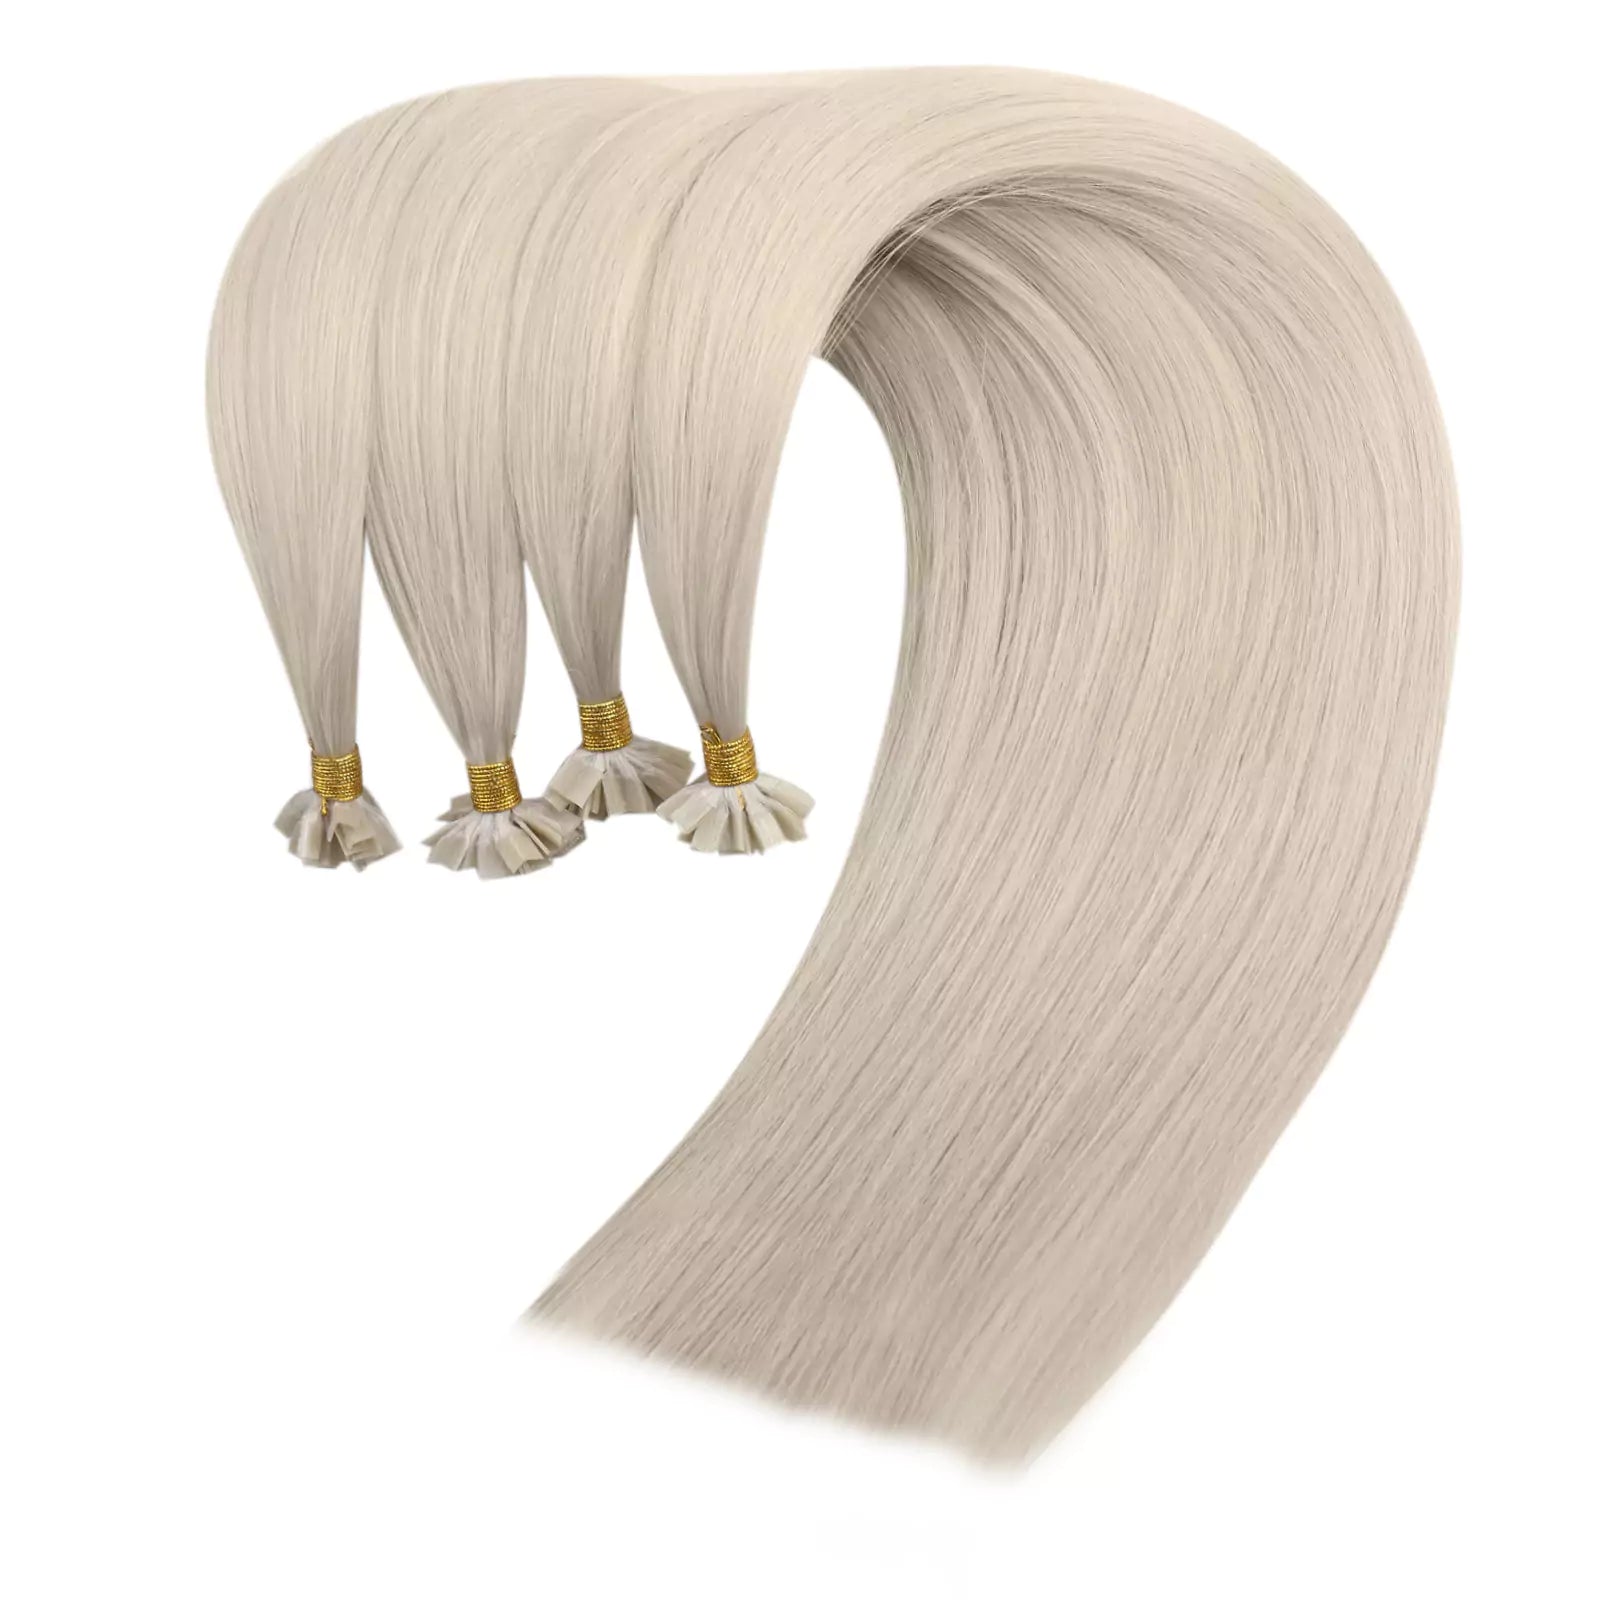 kertain fusion hair extensions human hair blonde